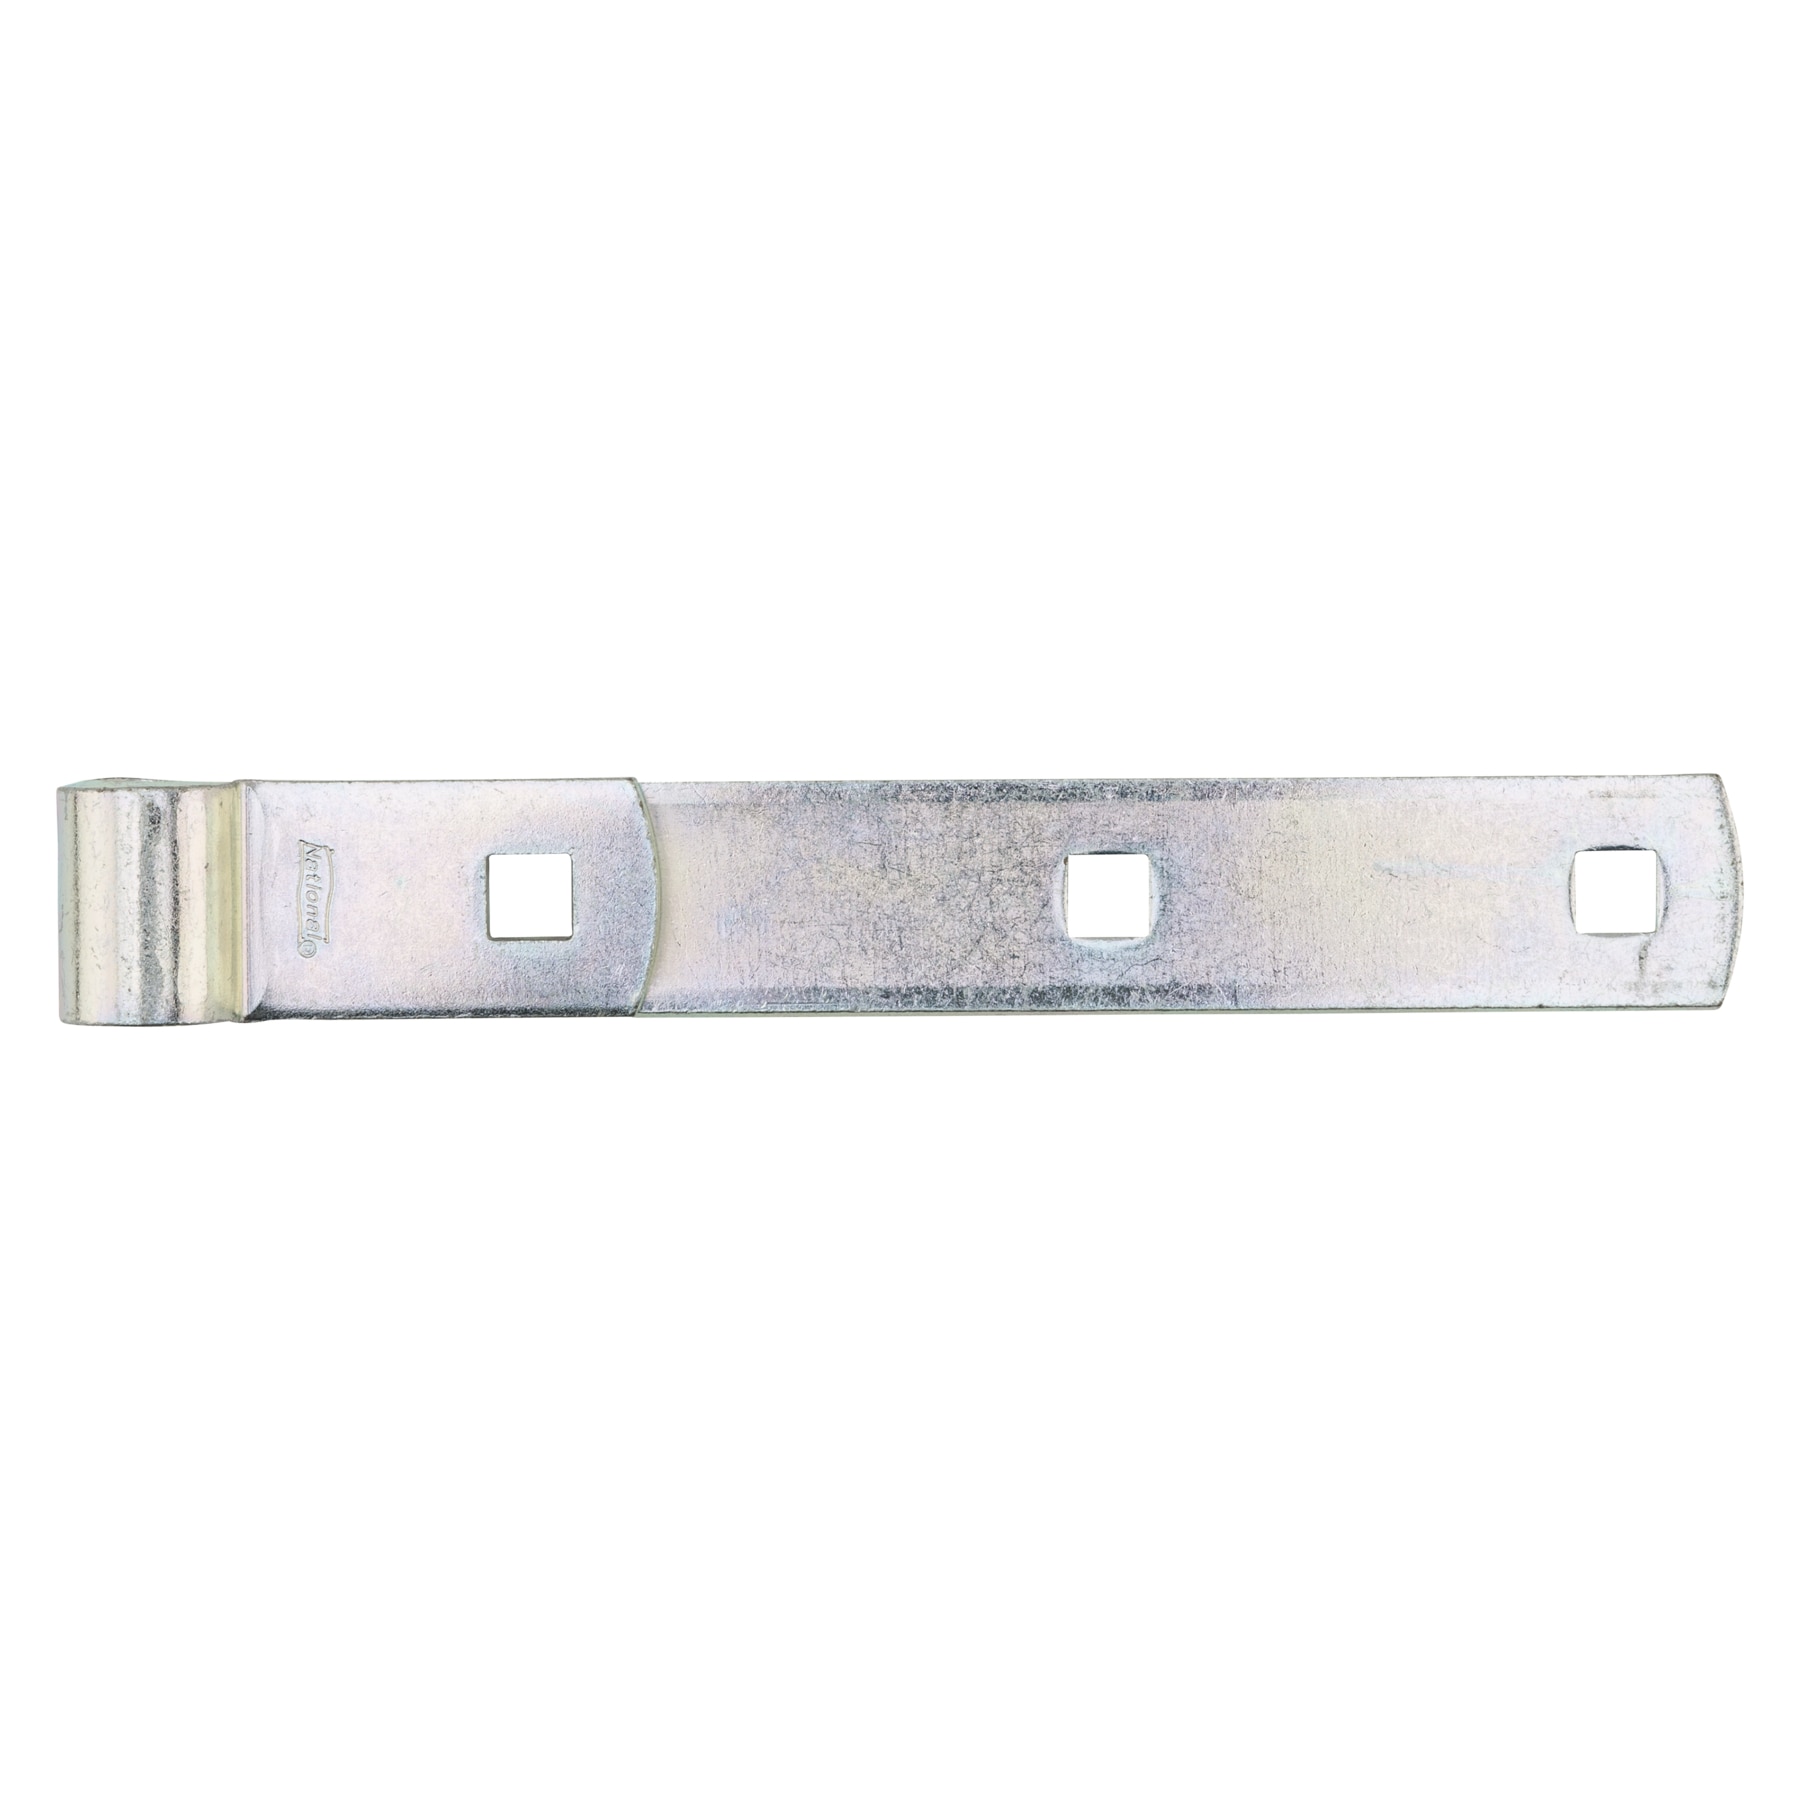 Strap Hinge, 8, in Steel/Zinc or Aluminum